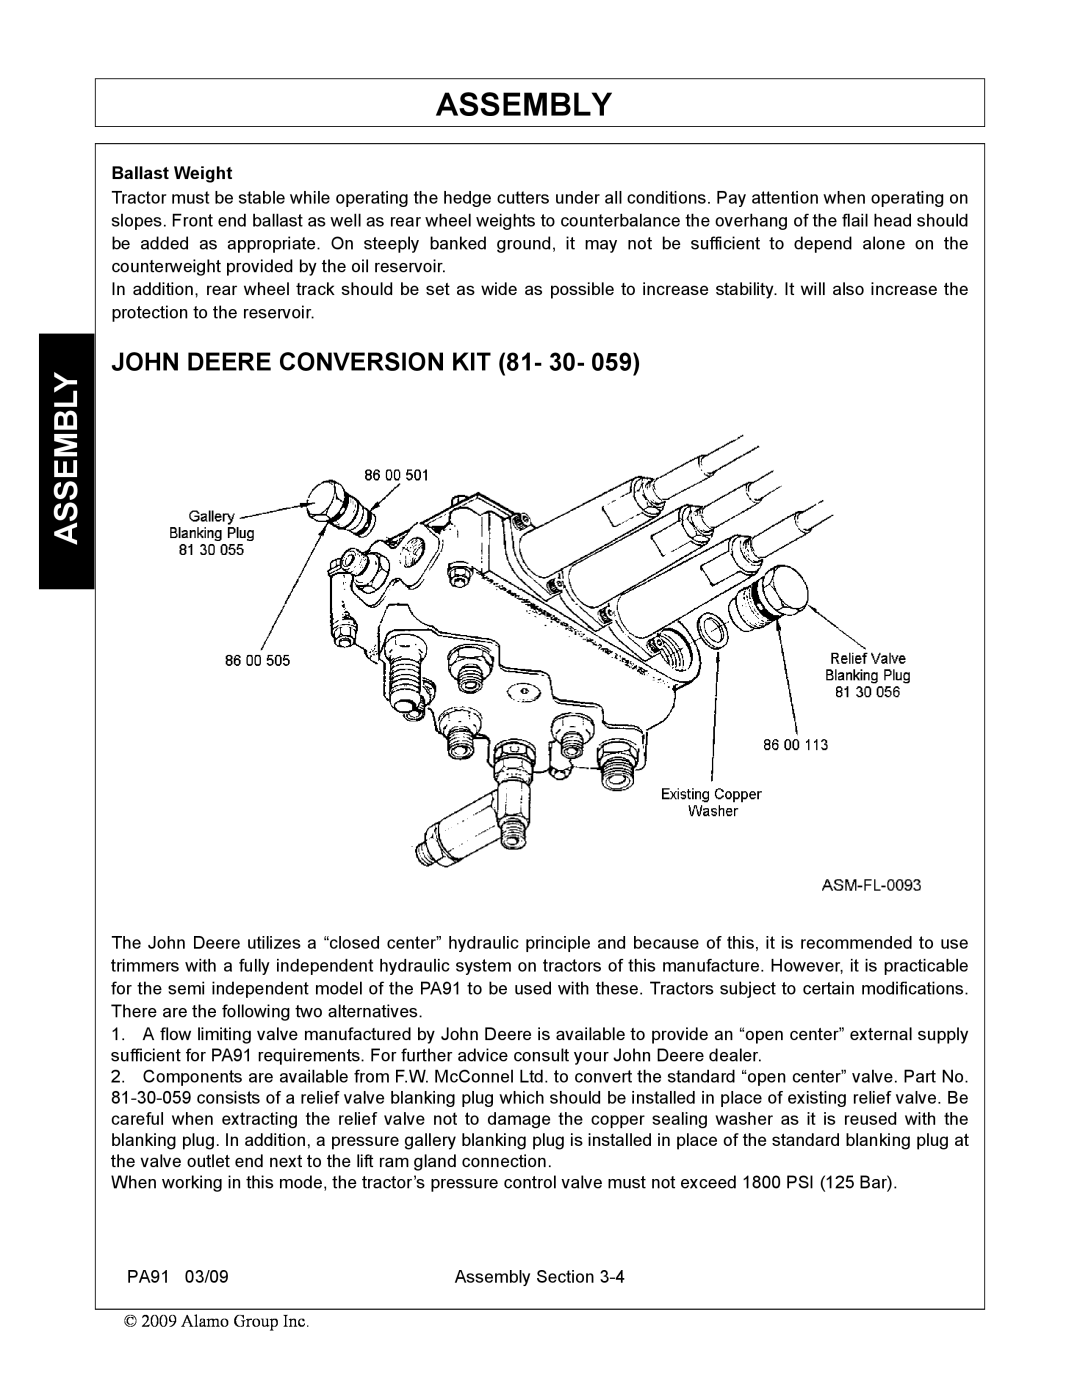 Alamo 7191852C manual JOHN DEERE CONVERSION KIT 81- 30, Assembly, Ballast Weight 